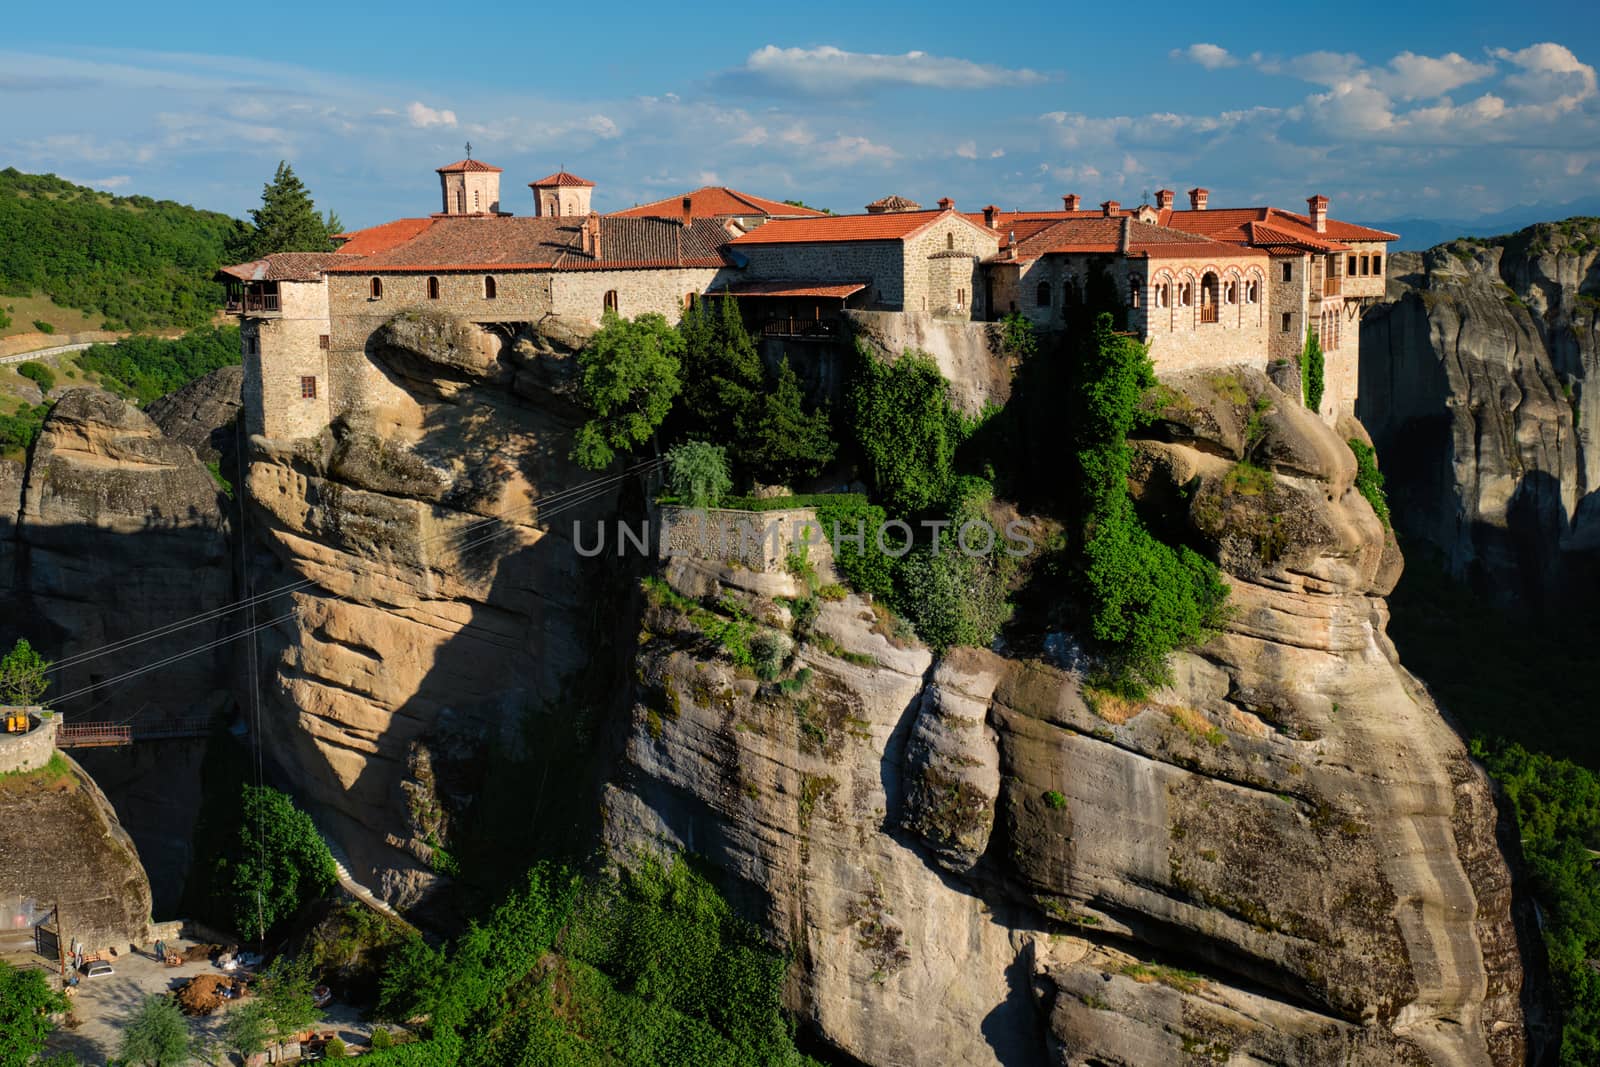 Monasteries of Meteora, Greece by dimol